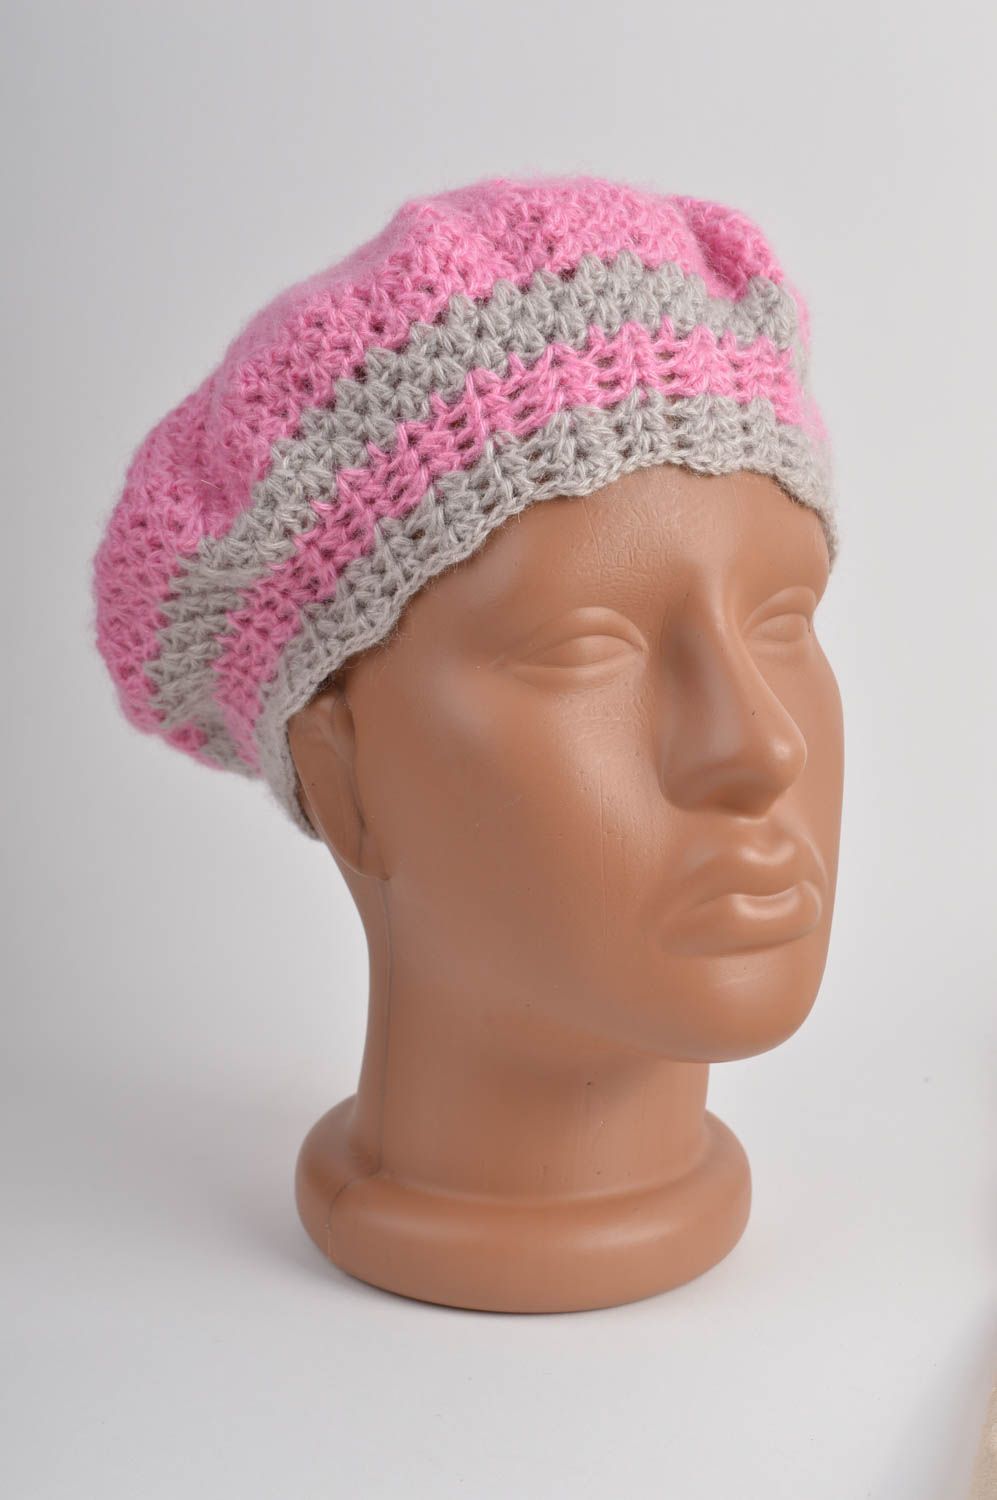 Handmade crochet beret baby hat crochet hats for babies accessories for girls photo 2